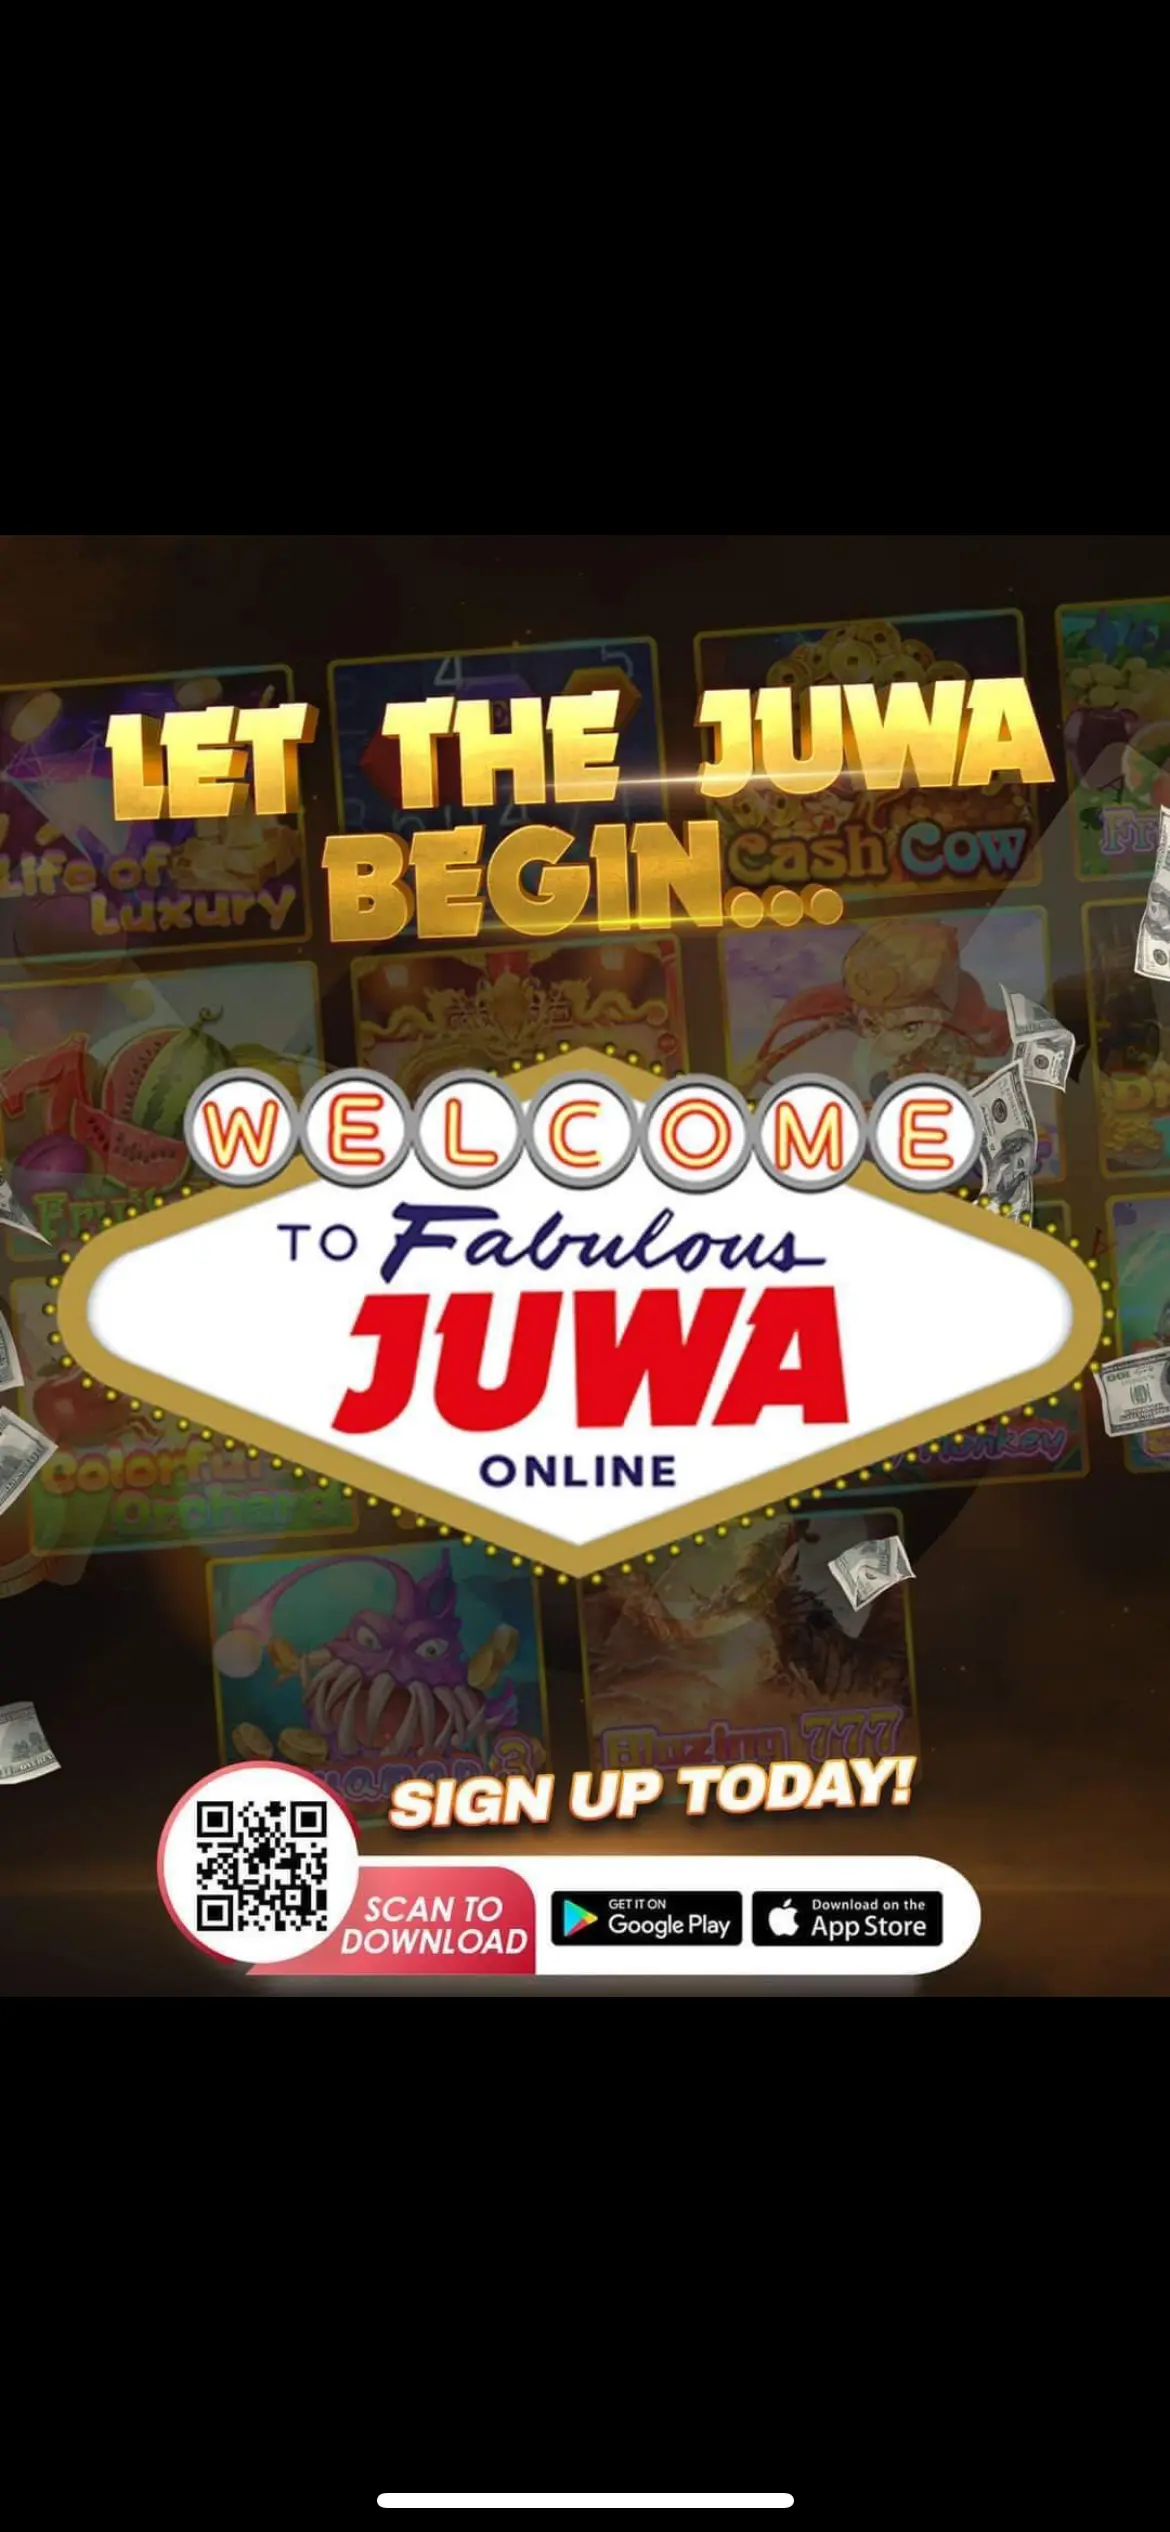 Juwa casino software games